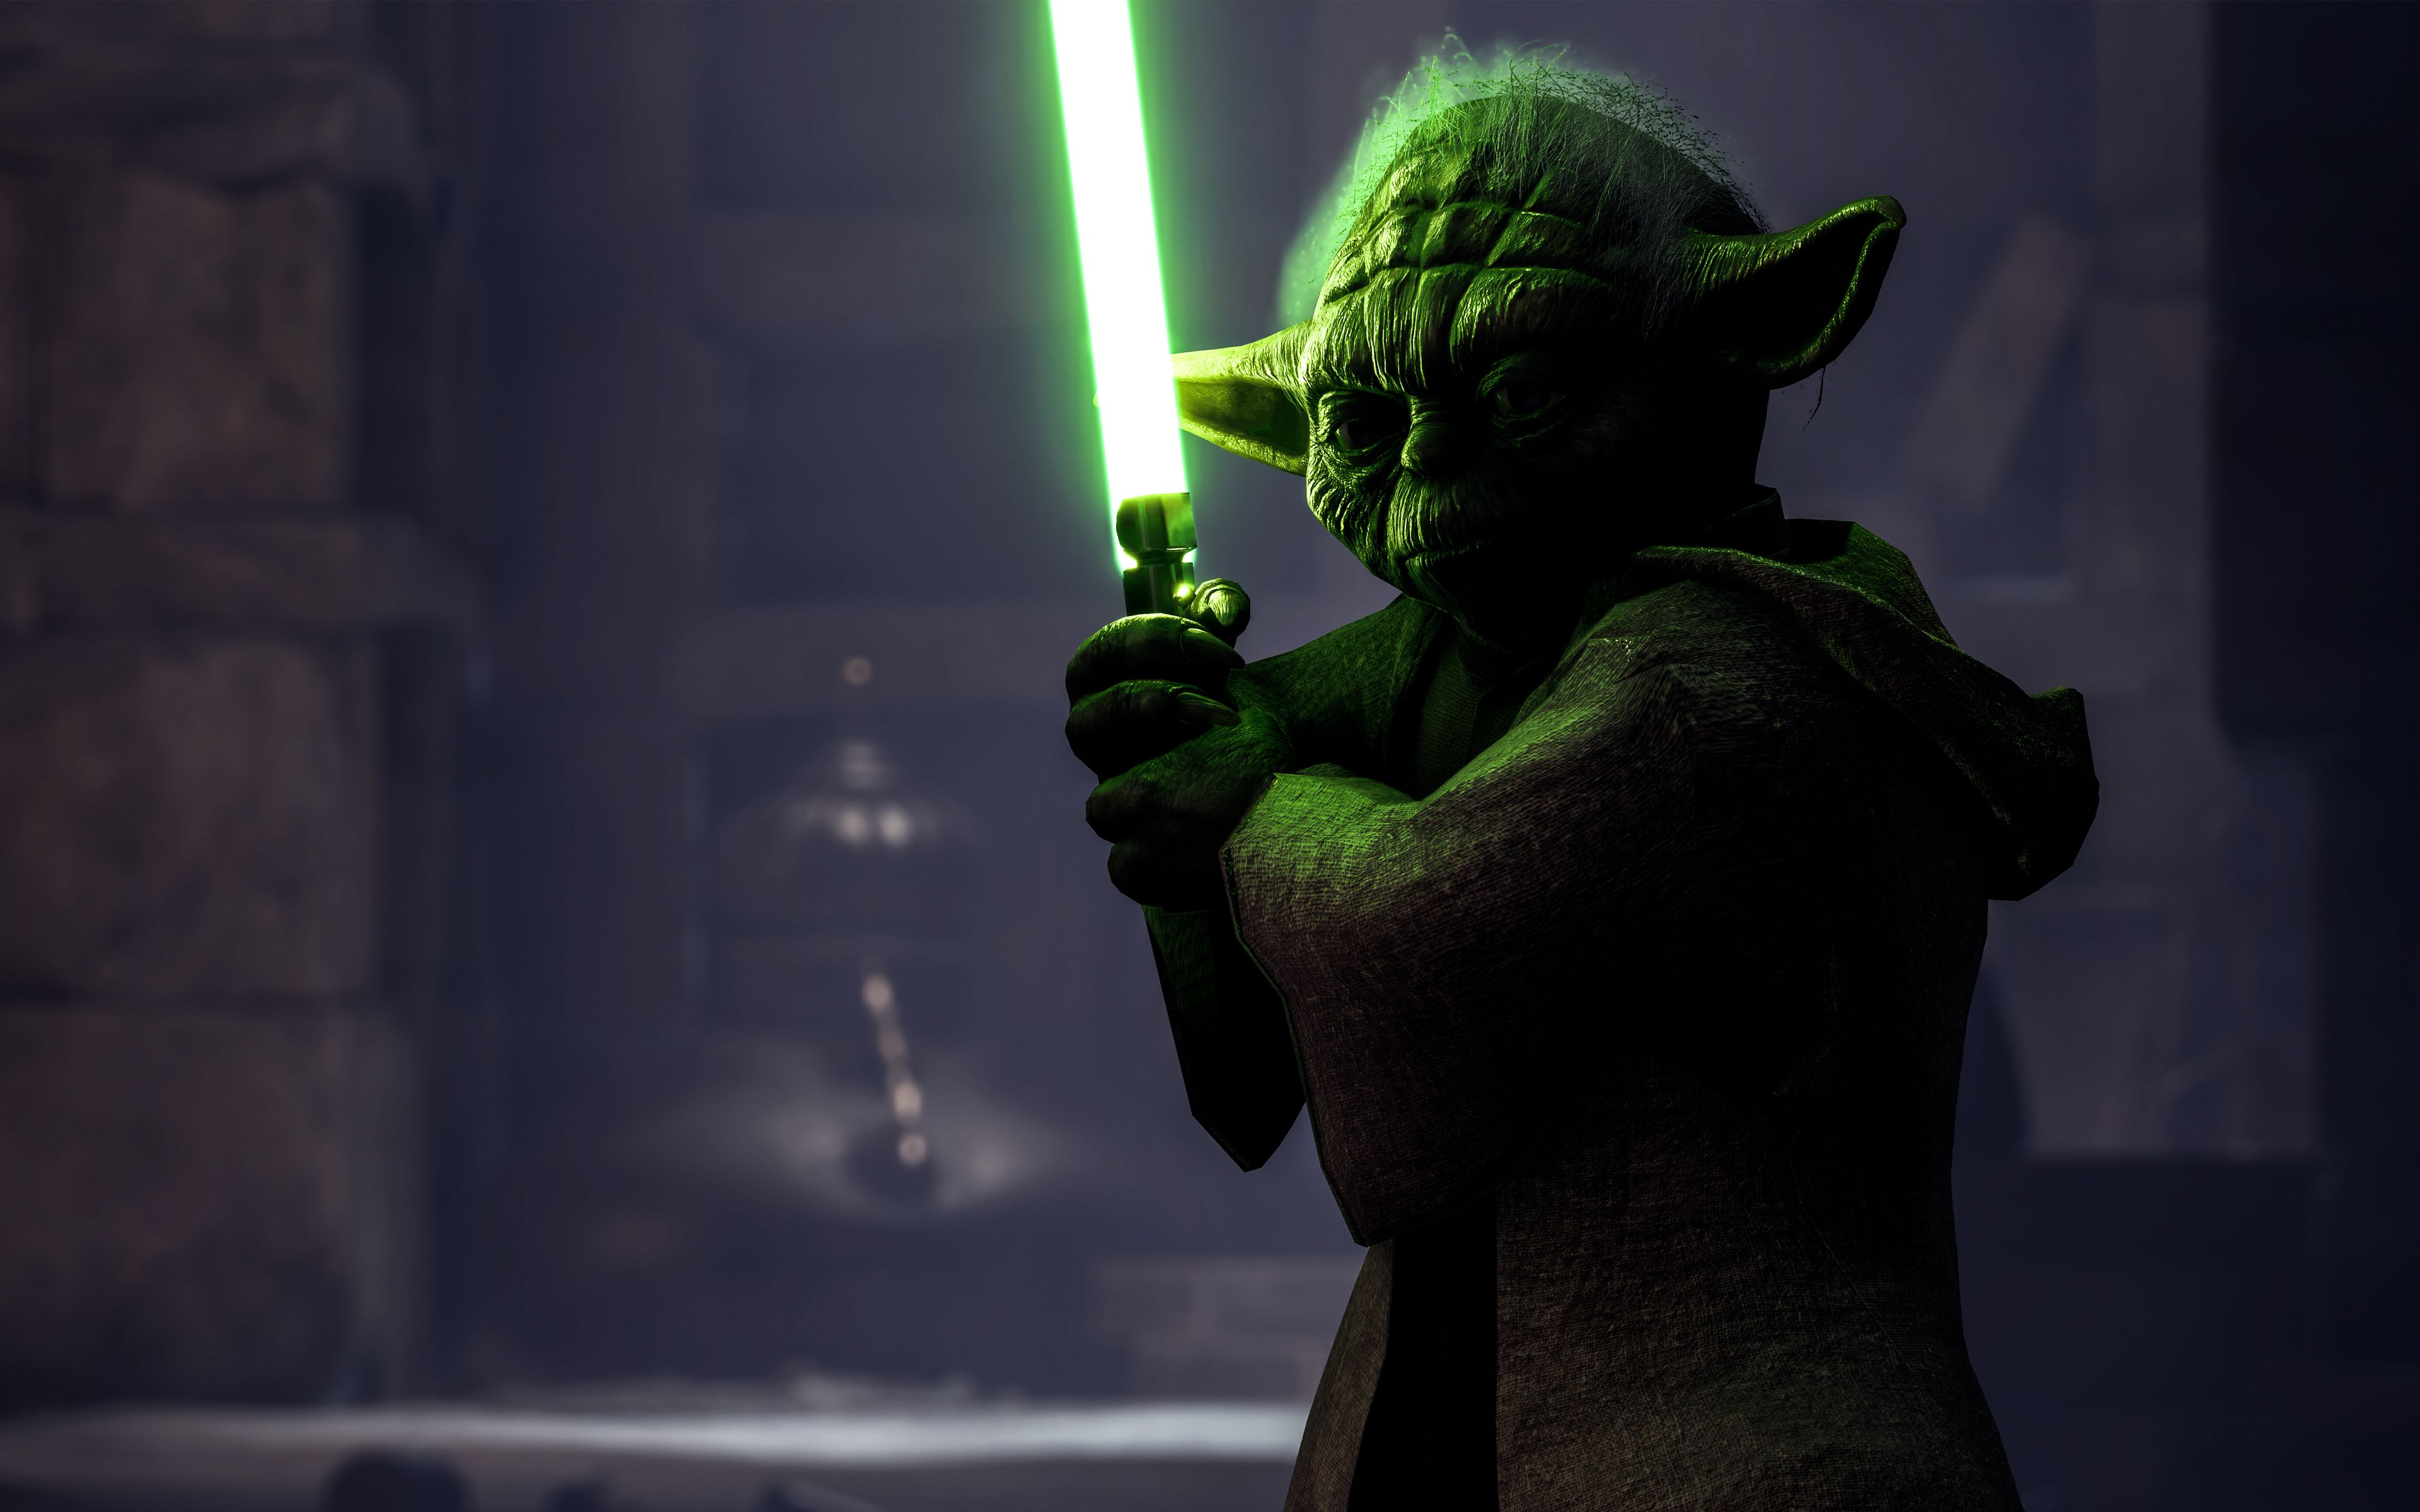 Yoda in Star Wars Battlefront 4K Wallpaper